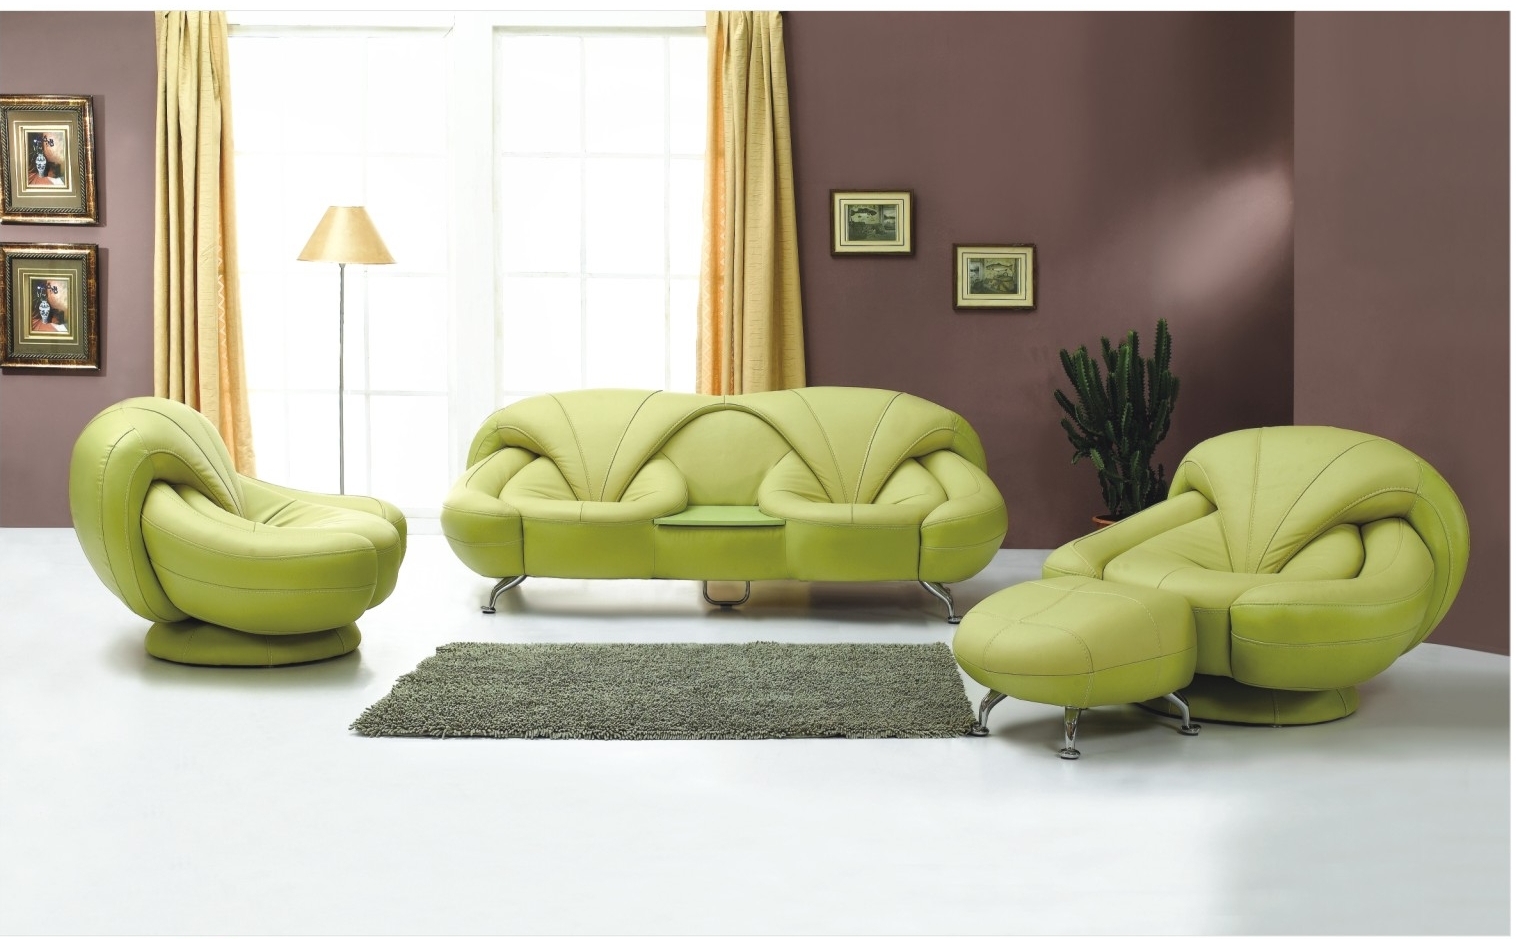 Stylish-living-room-green-leather-furniture.jpg